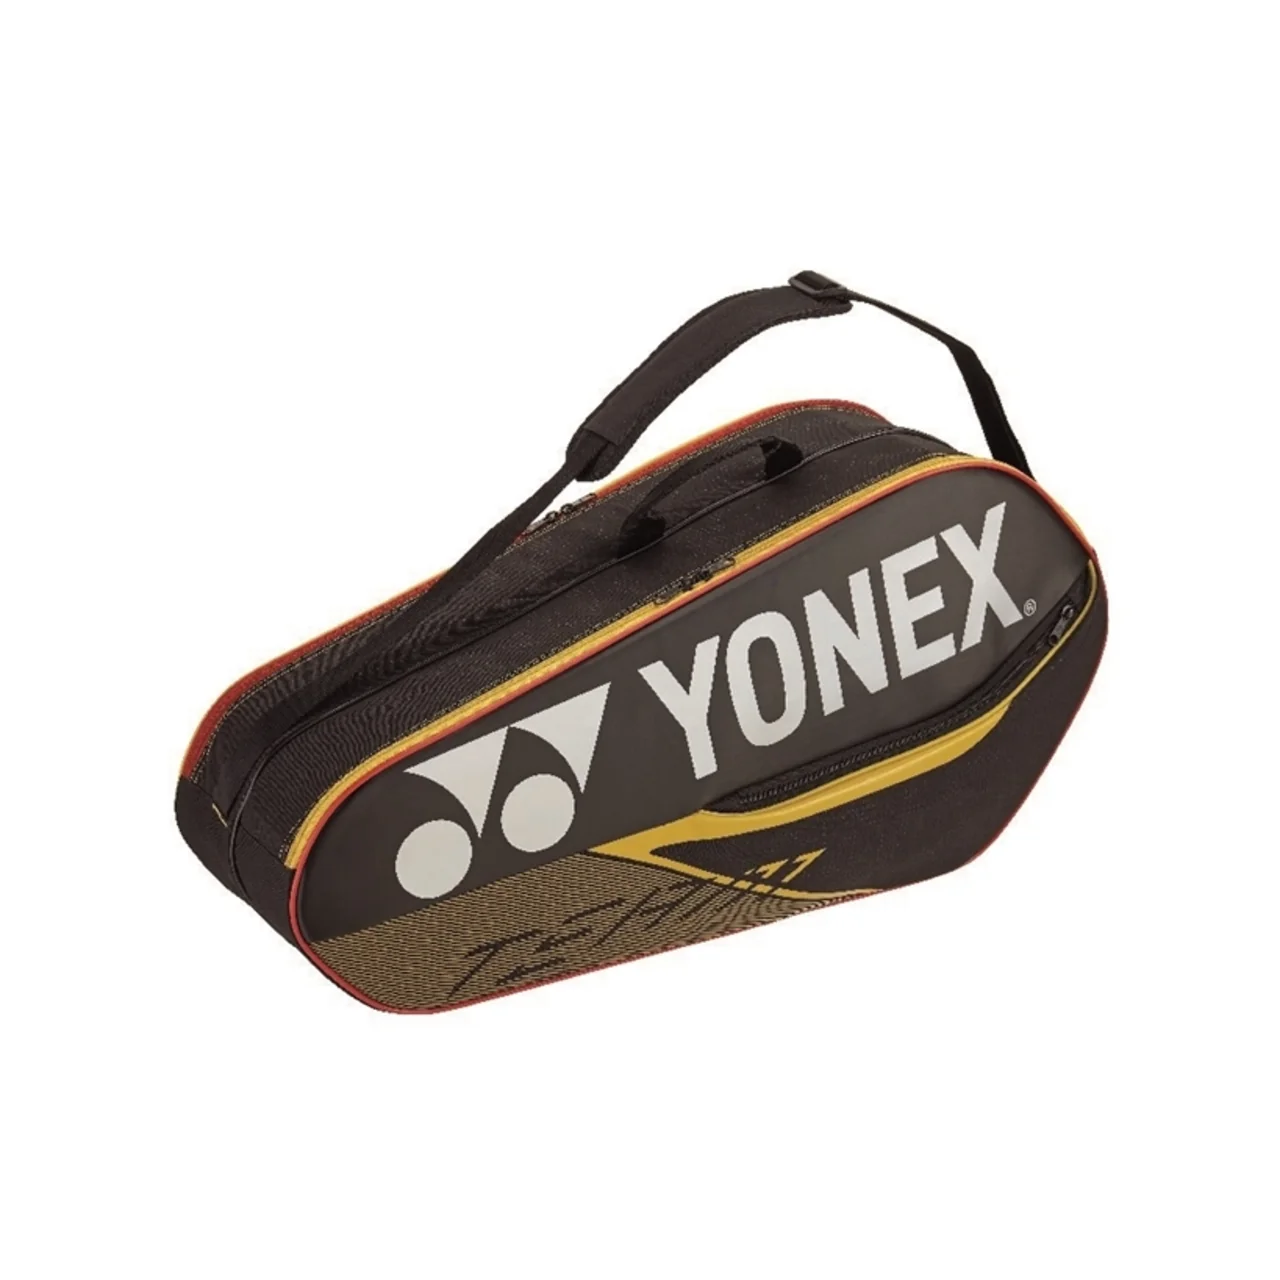 Yonex Team Bag x6 Black/Yellow 2020